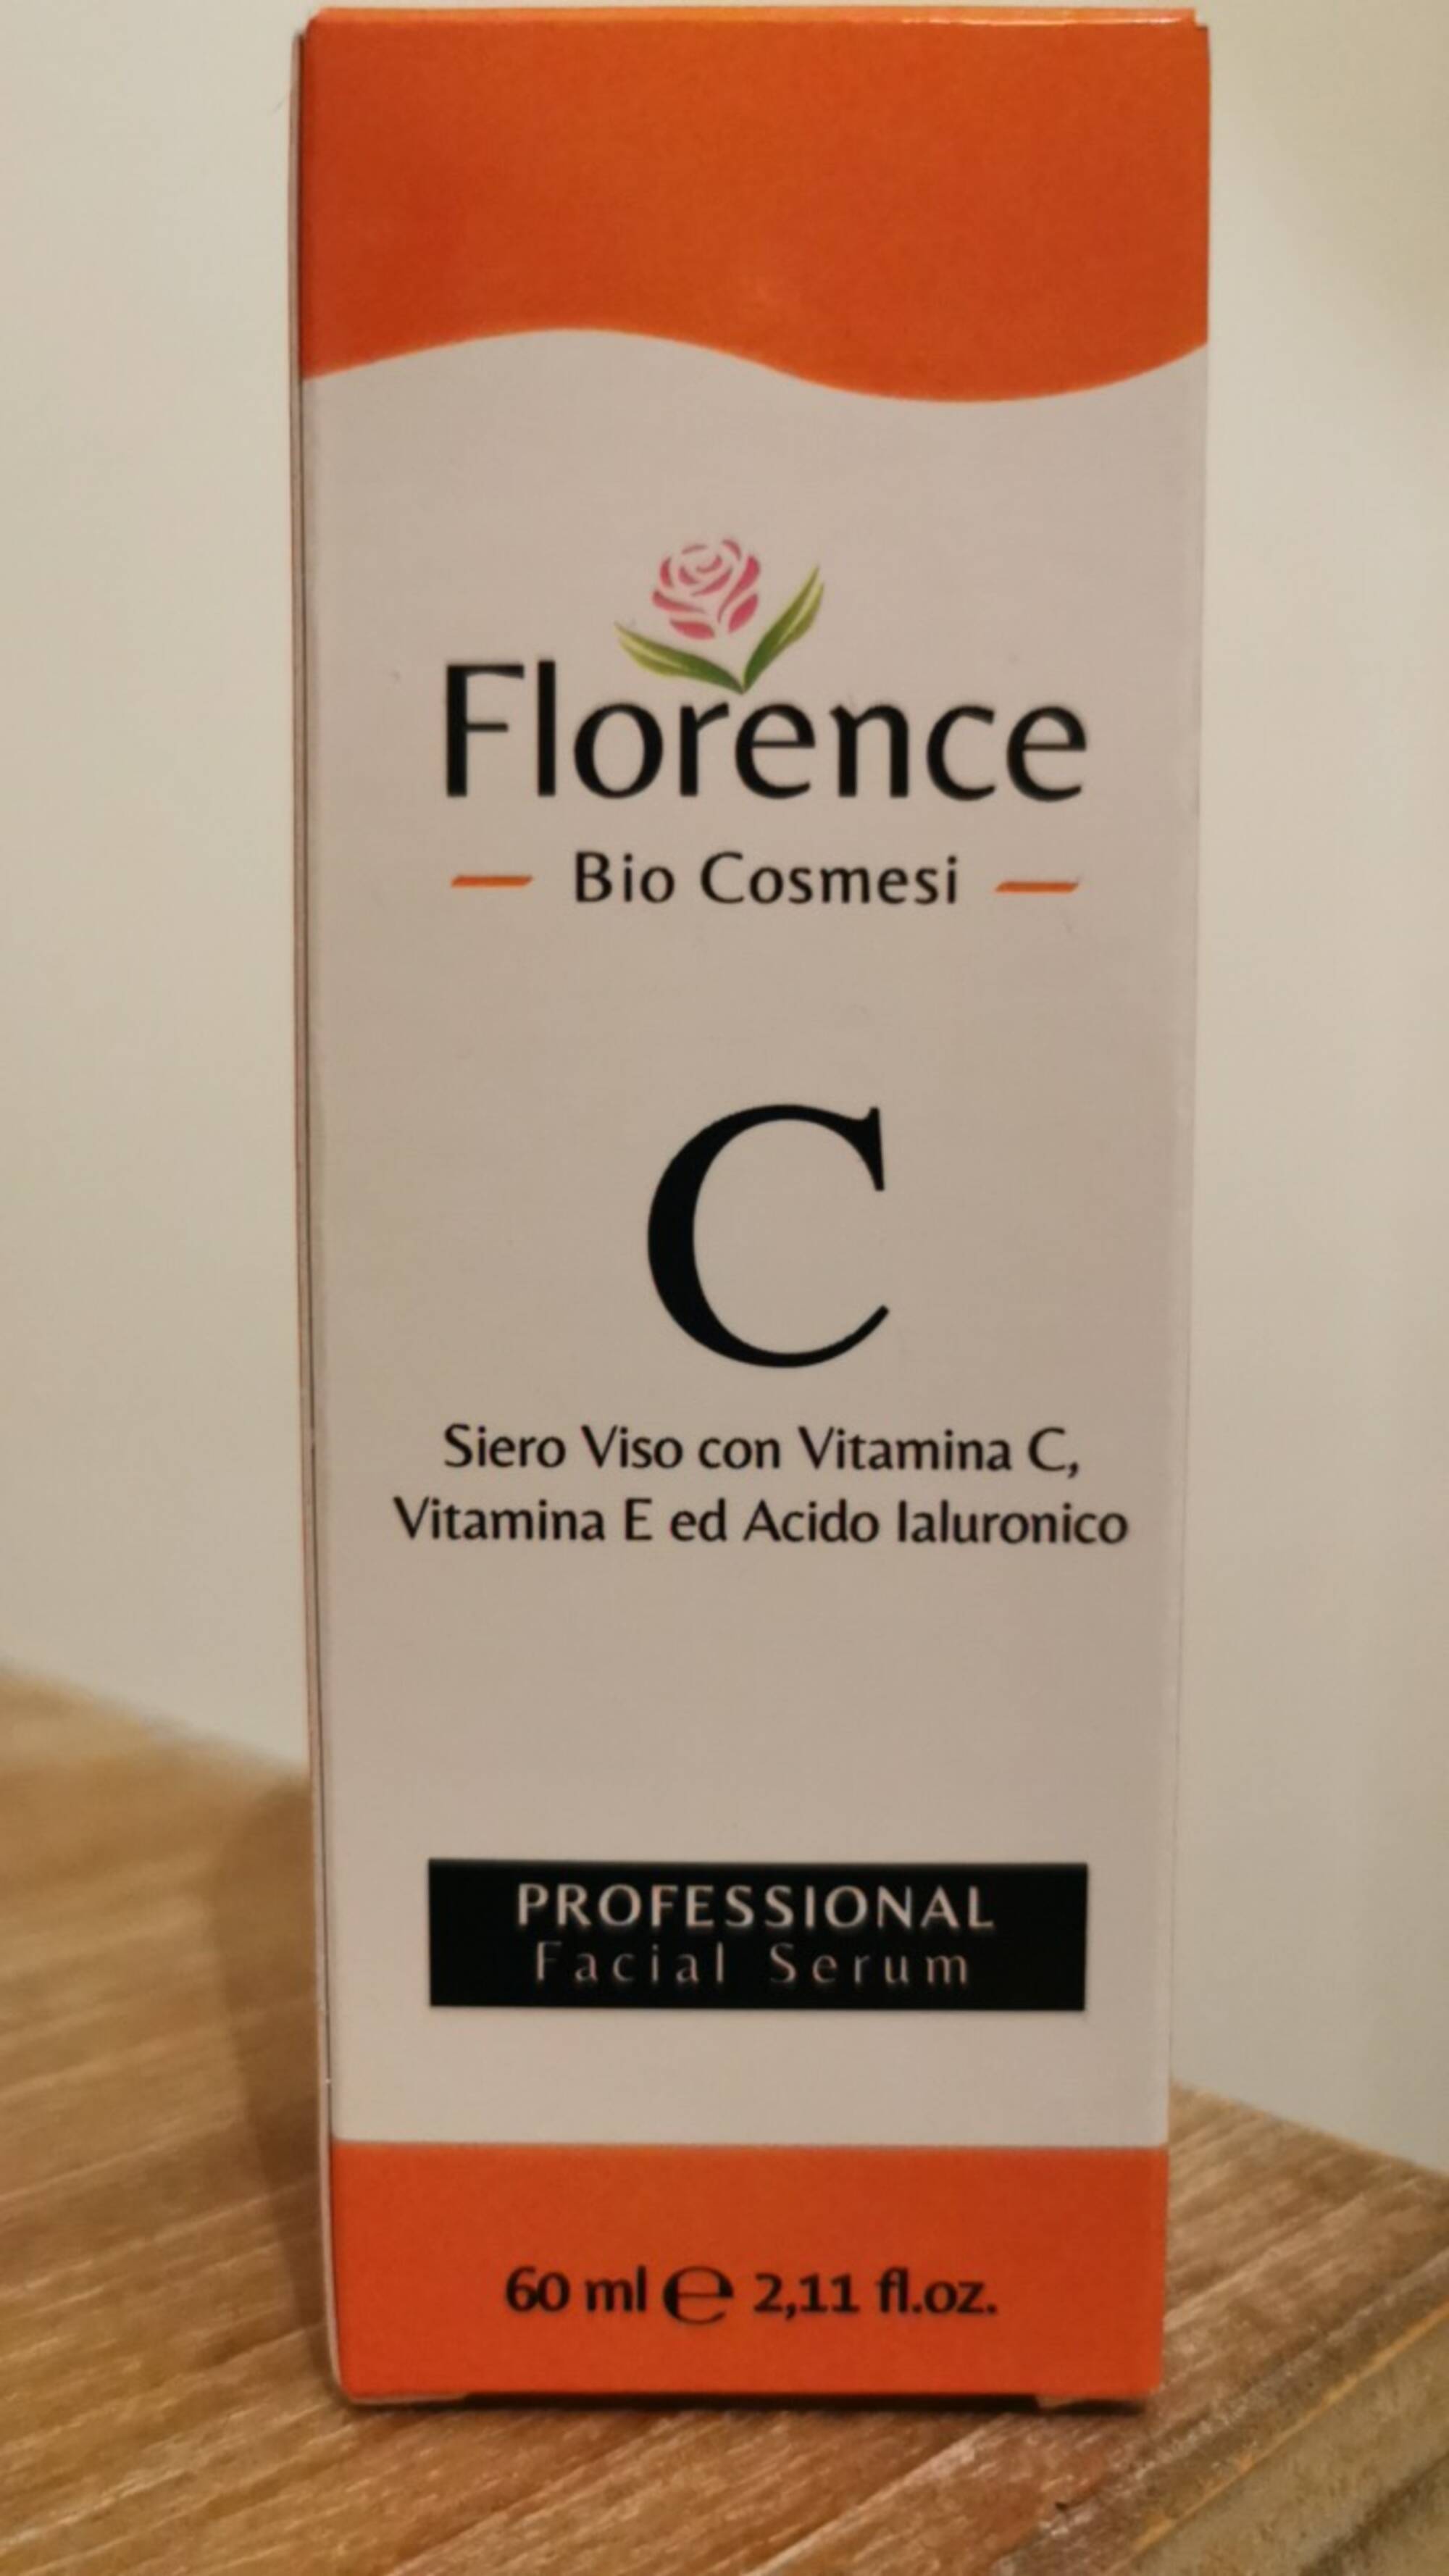 FLORENCE - C - Professional - Facial serum